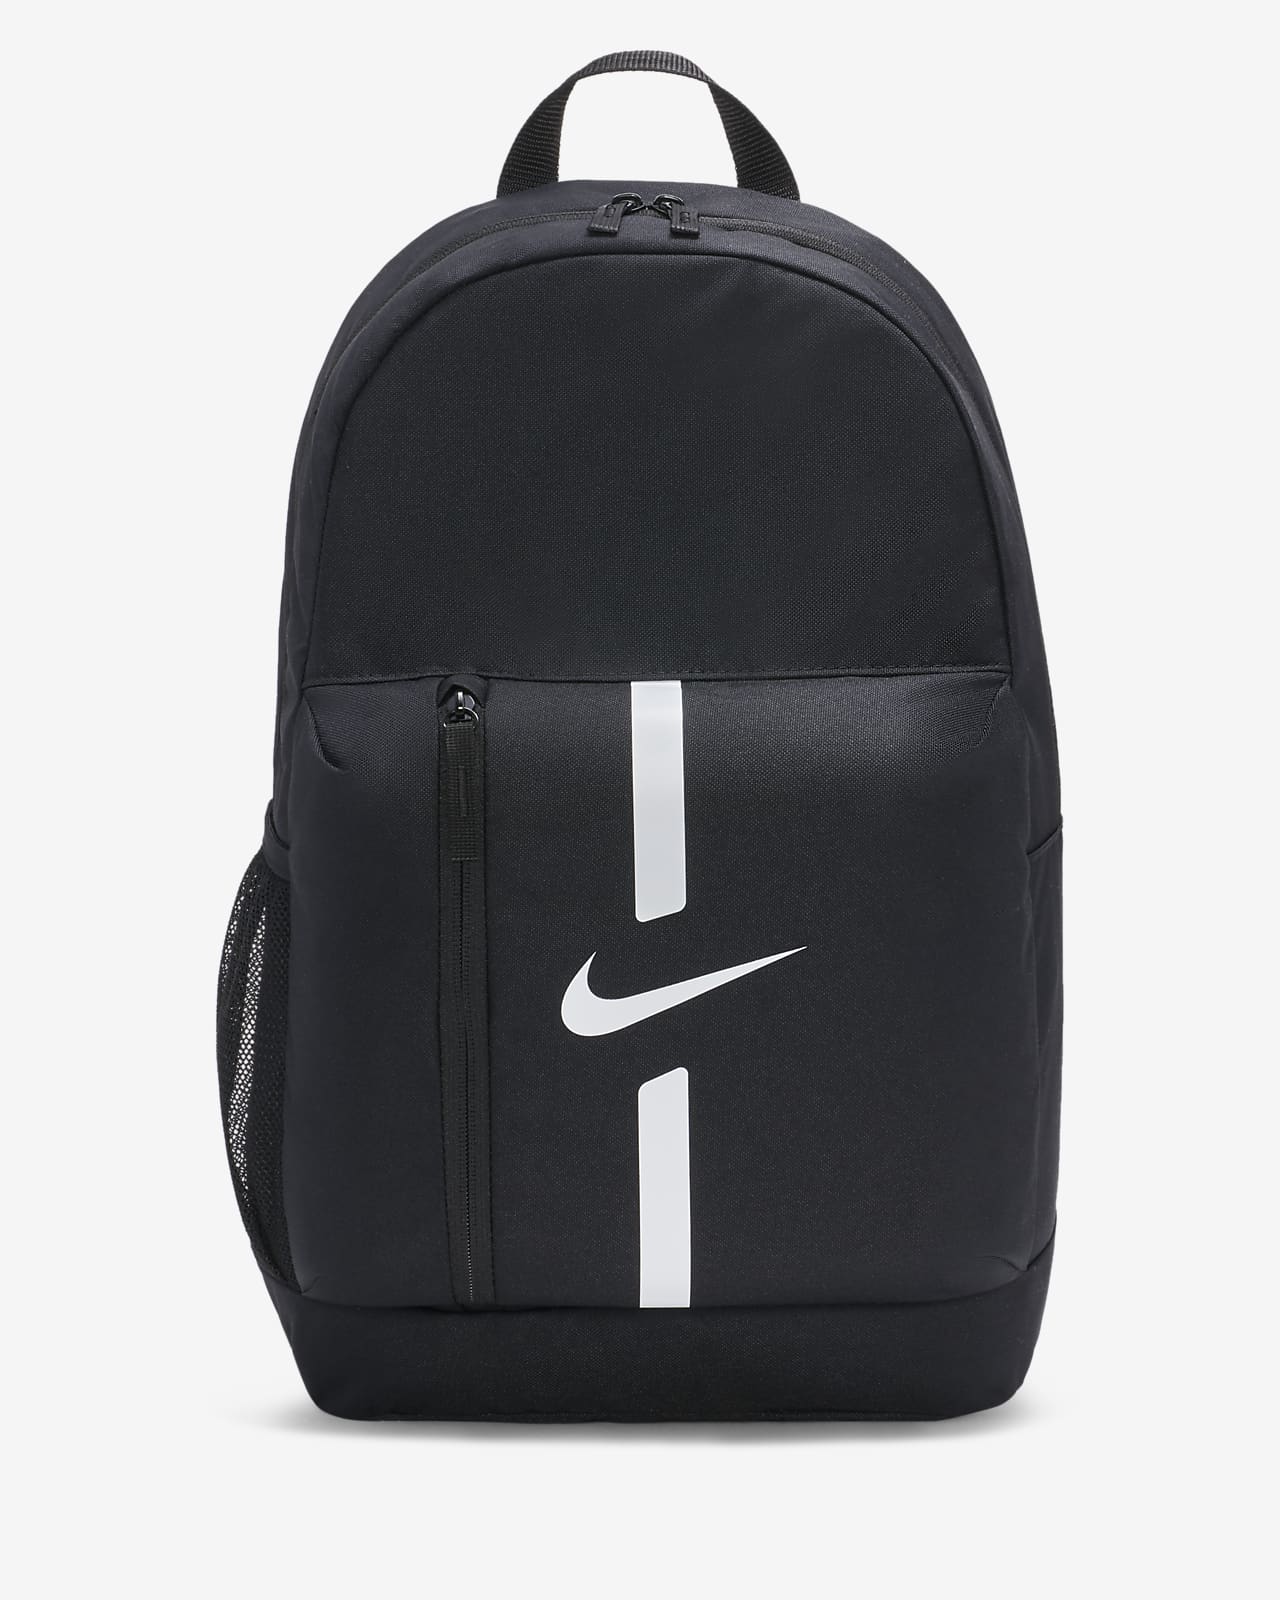 Nike Academy Team voetbalrugzak voor kids (22 liter)